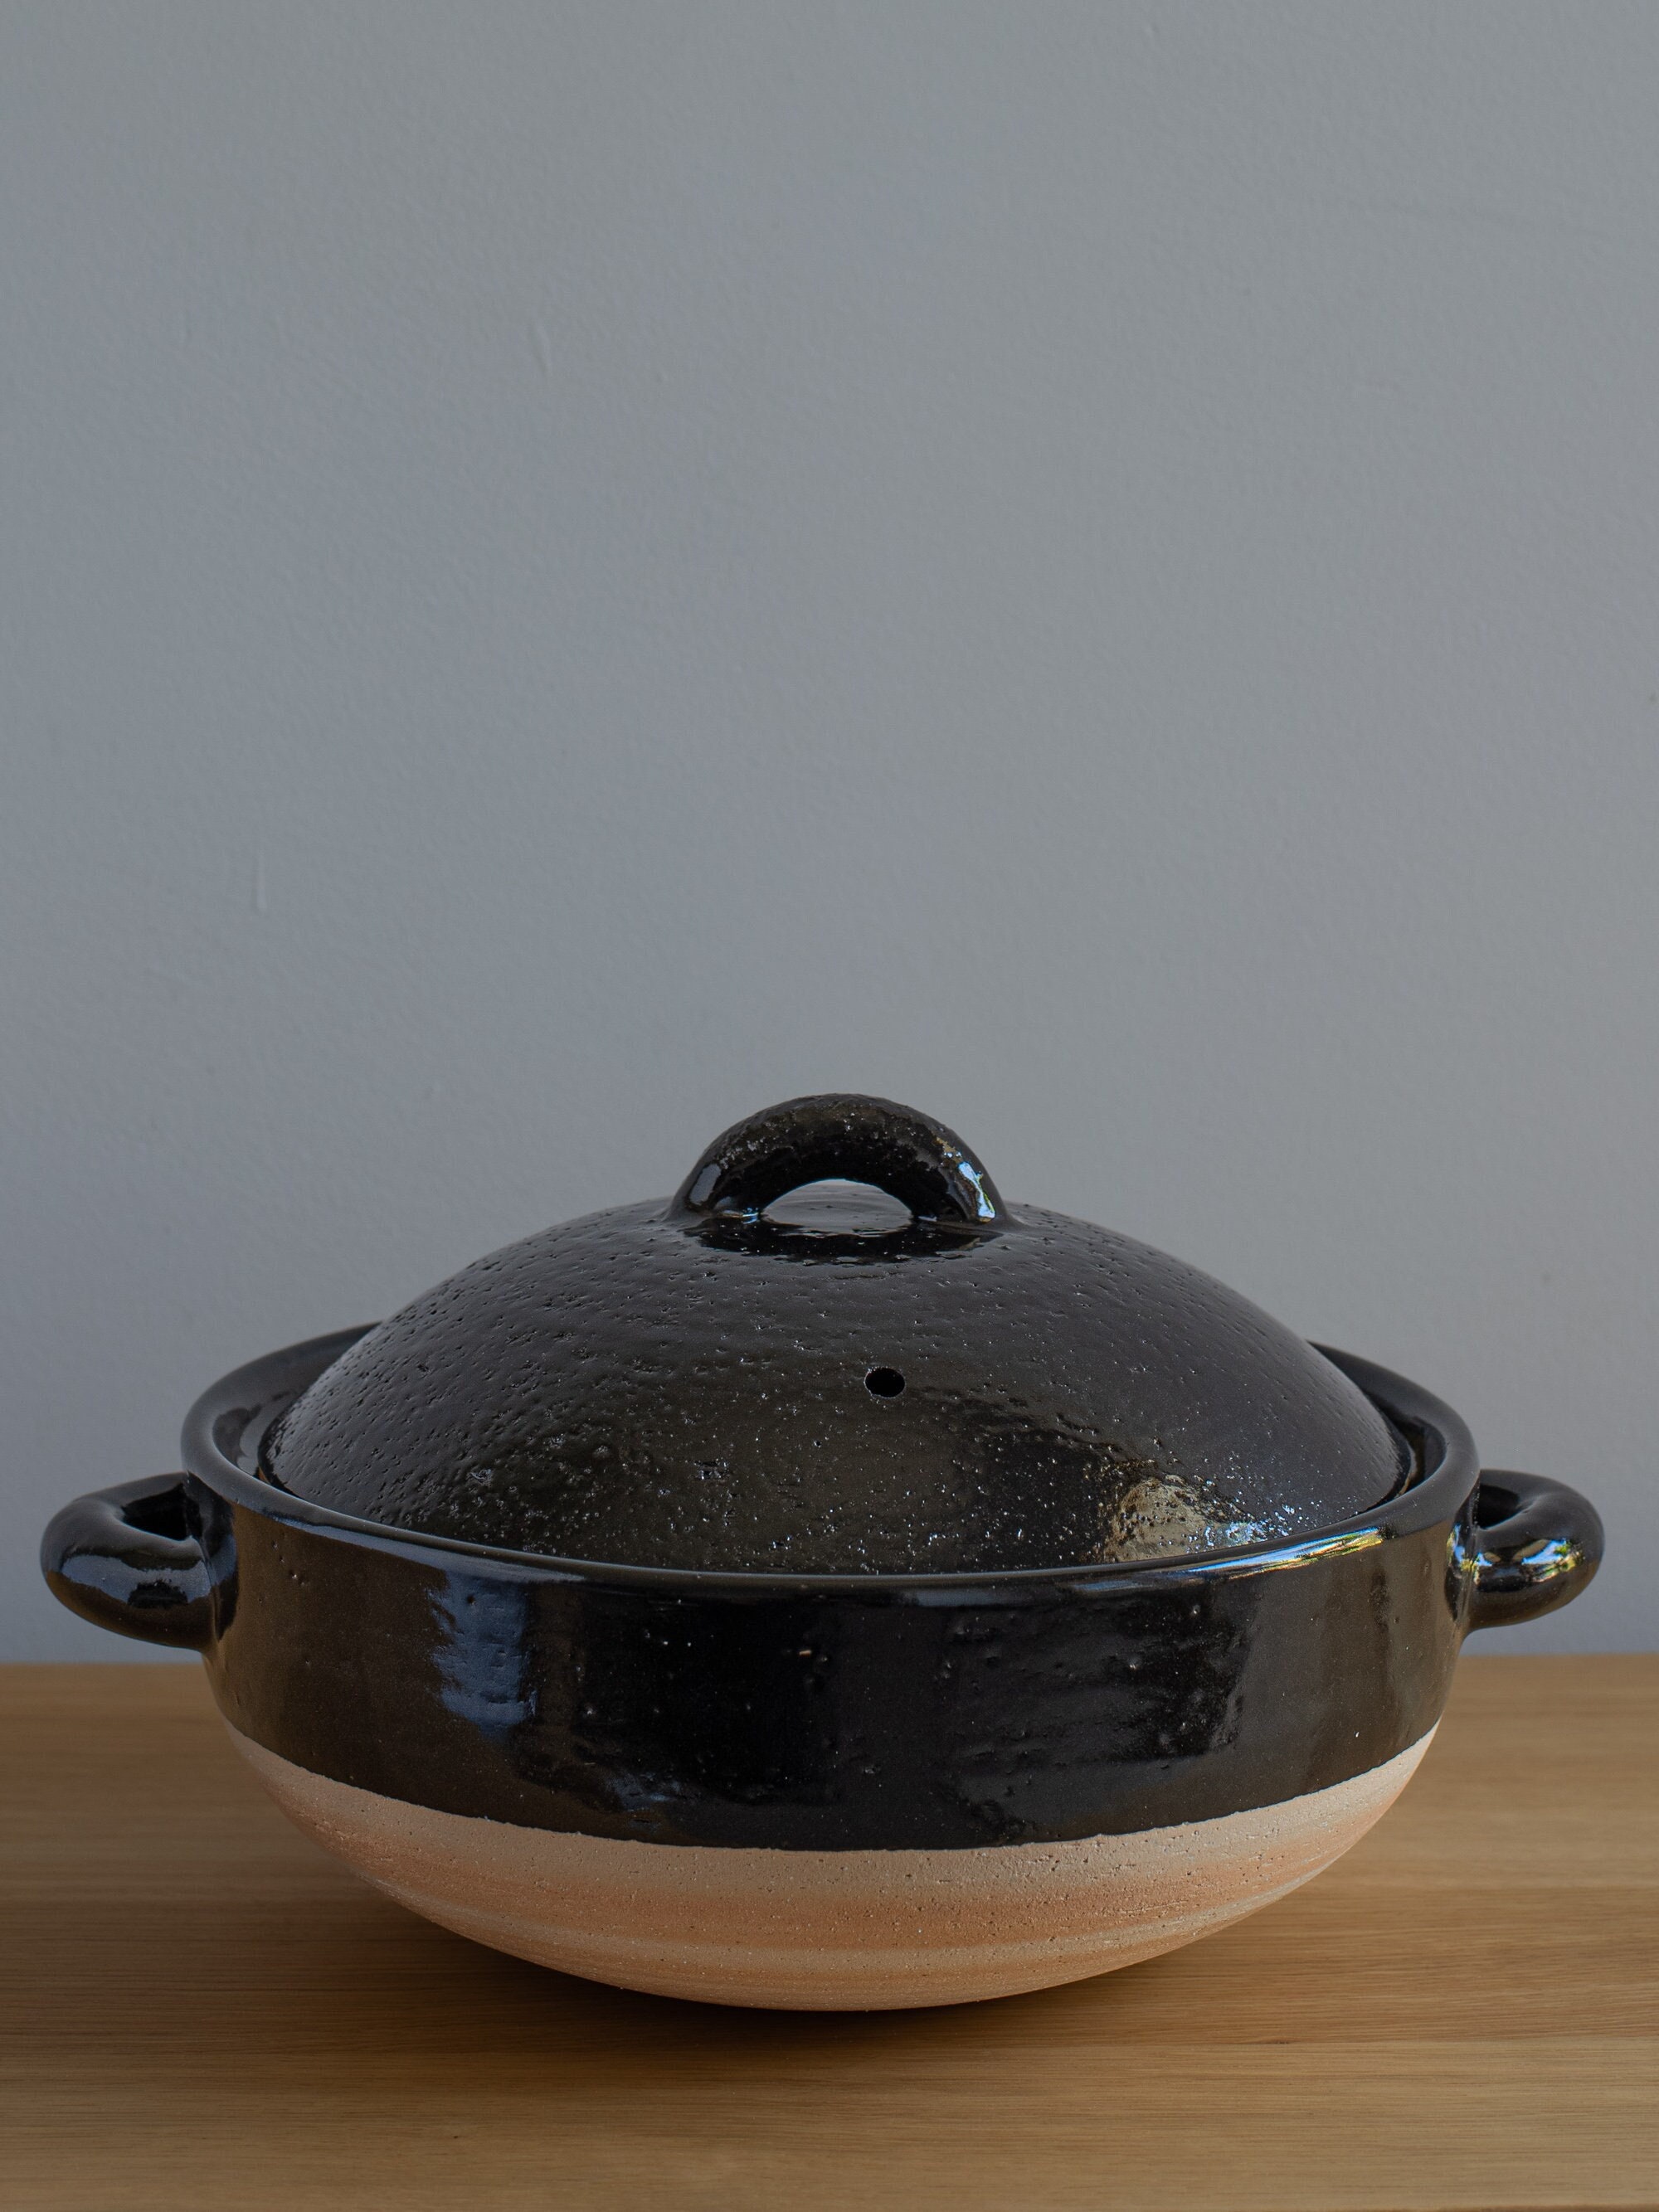 Tianji DSG-TZ30 Electric Clay Pot Slow Cooker for Claypot Rice and Casserole Porridge, Ceramic Casserole Cooking Pot with Unglazed Porcelain